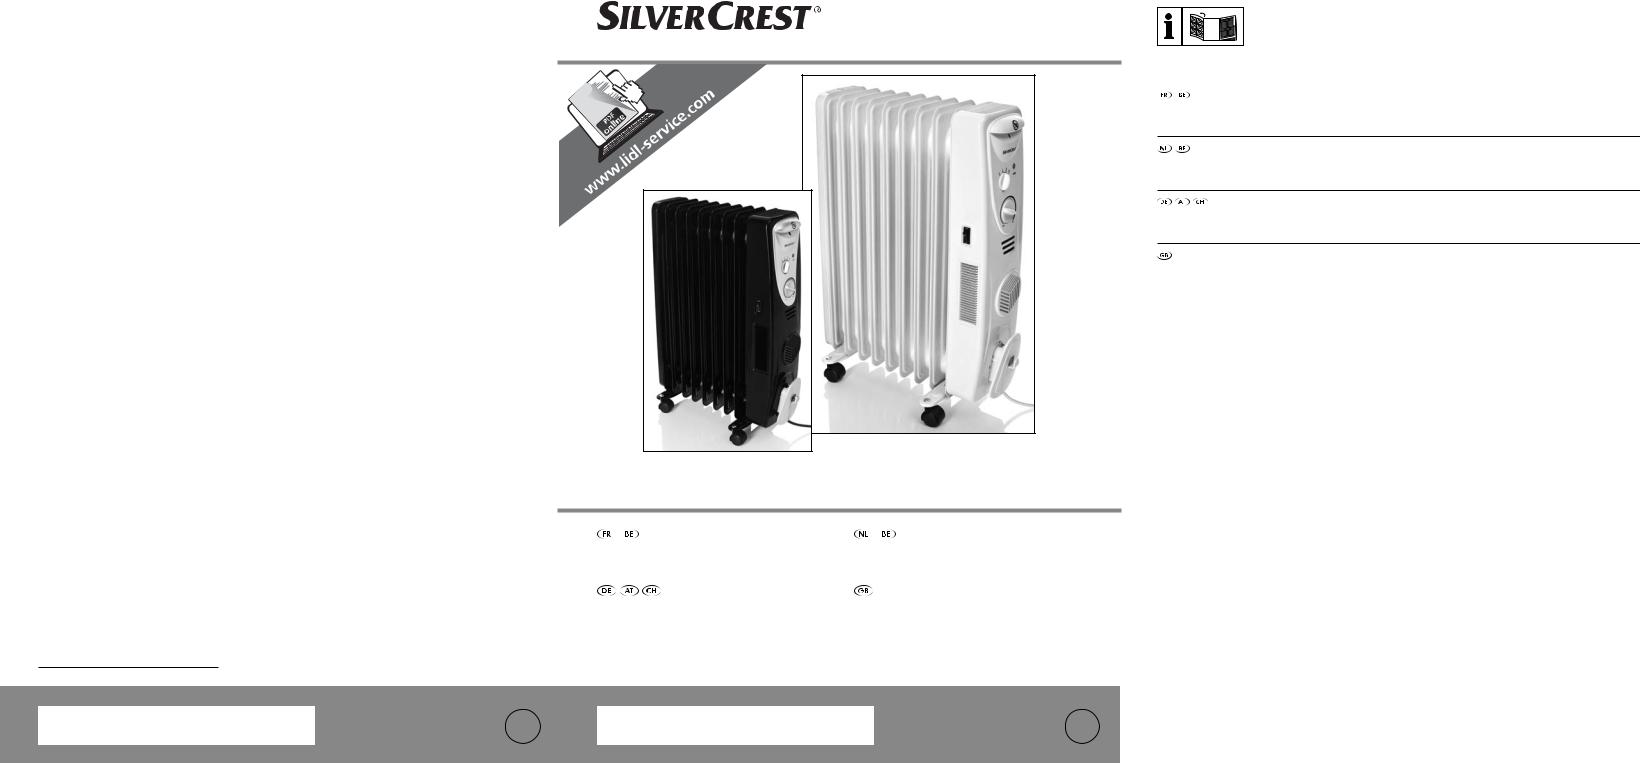 Silvercrest SOR 2600 A1 User Manual